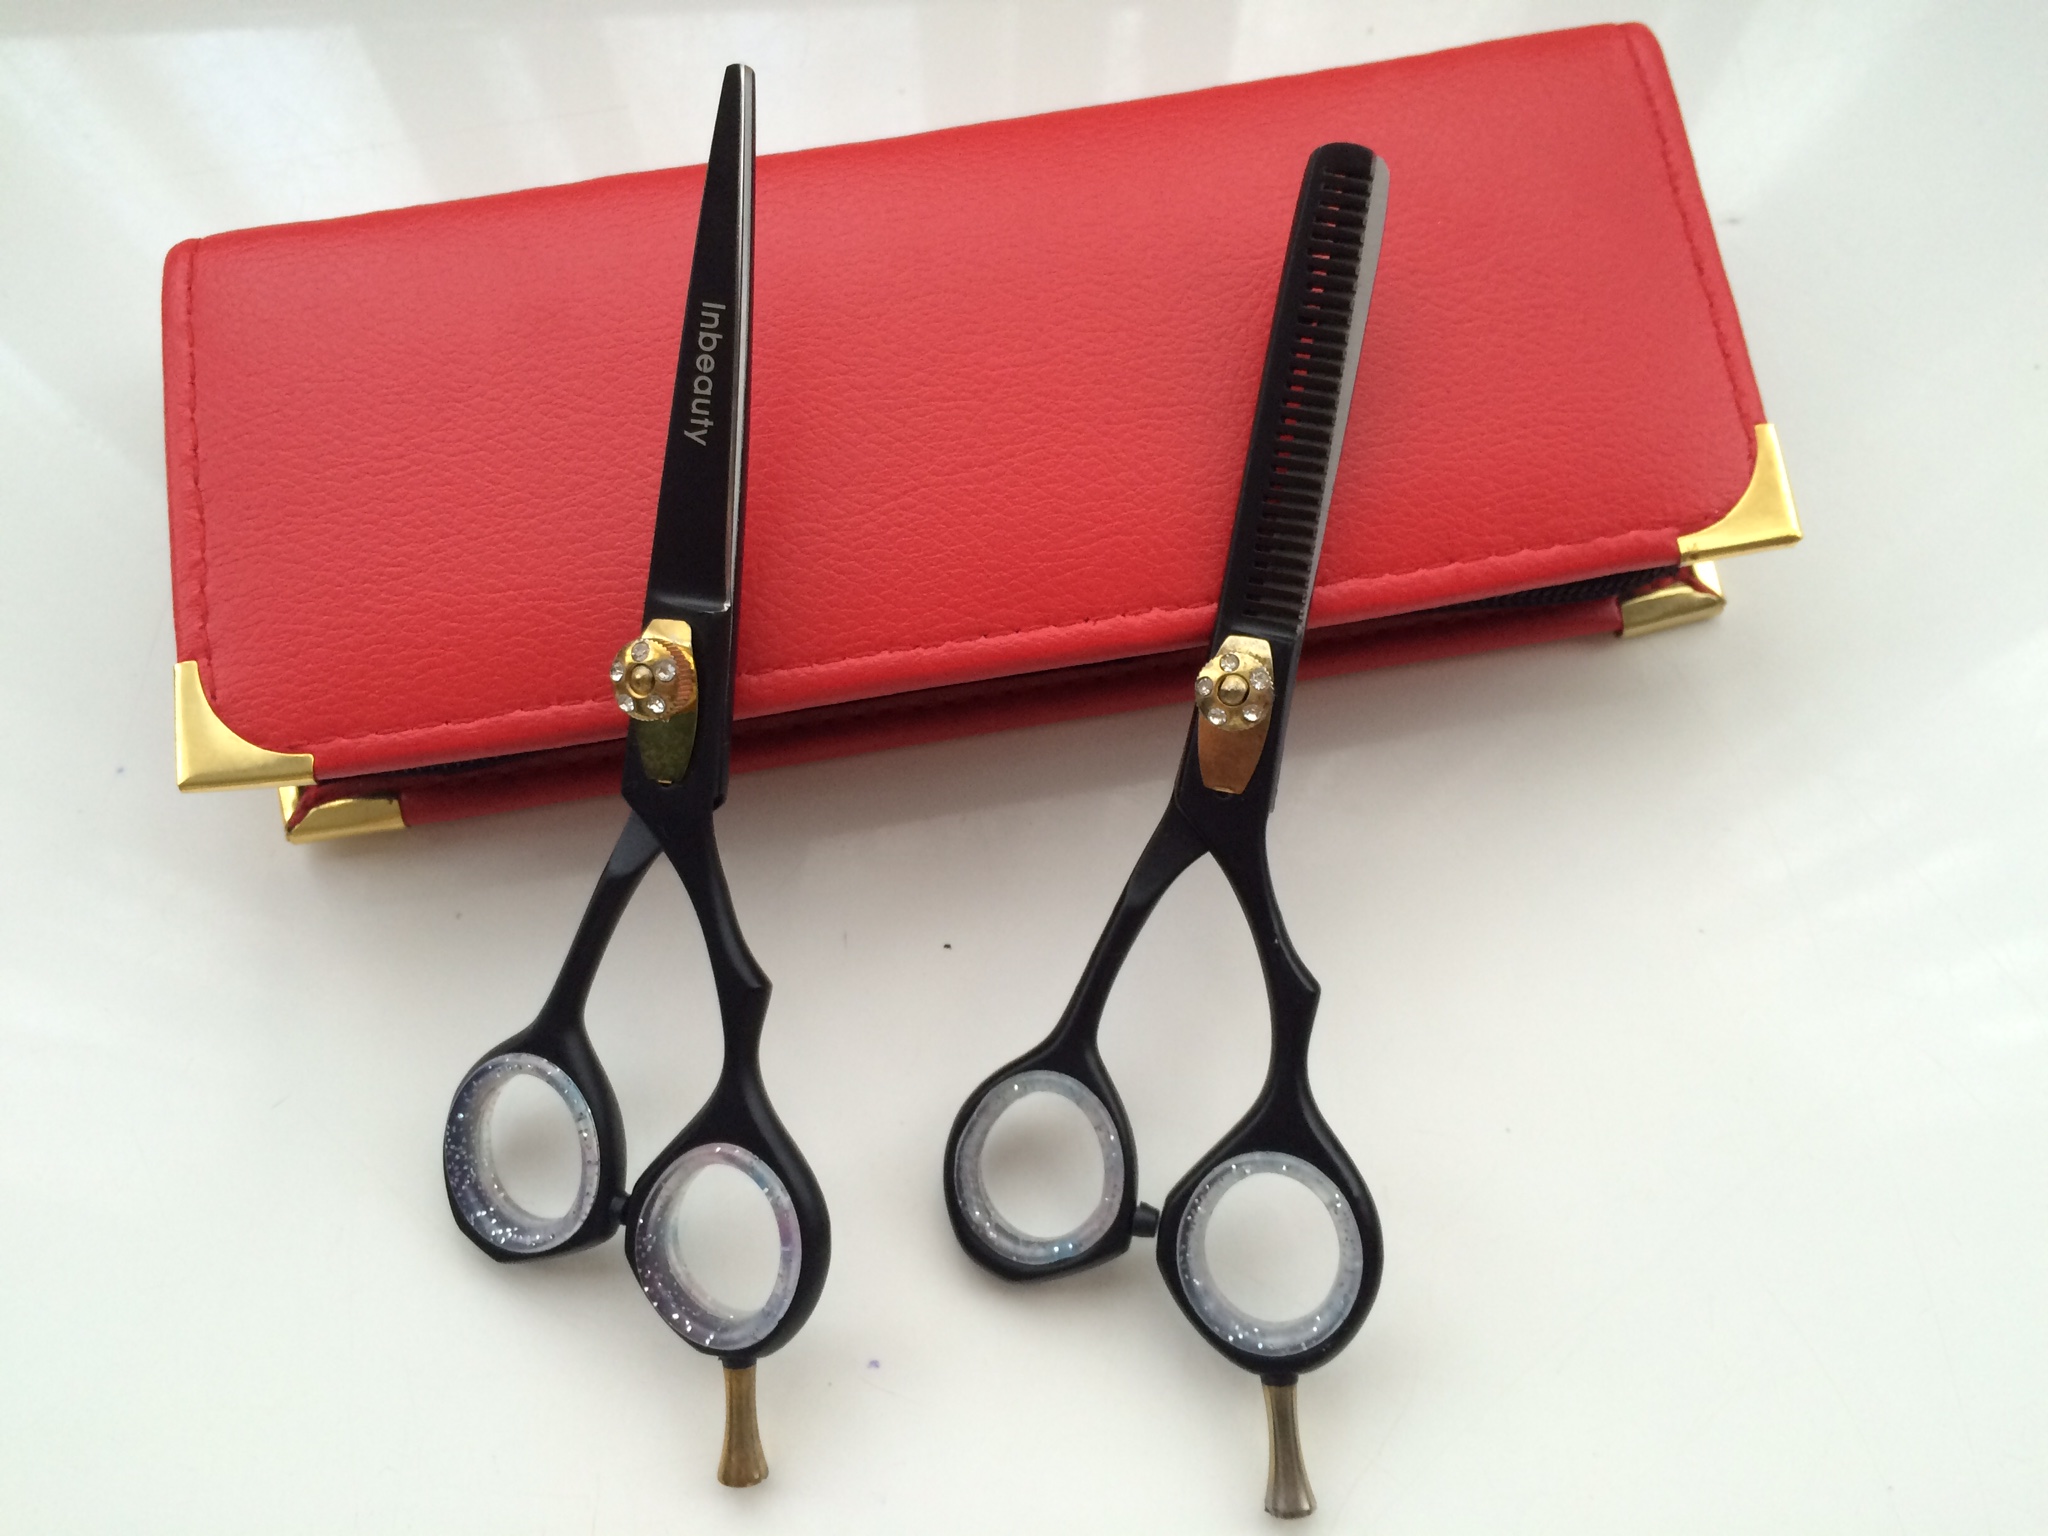 hair dressing scissor set black jewled stainless steel 5.5inch